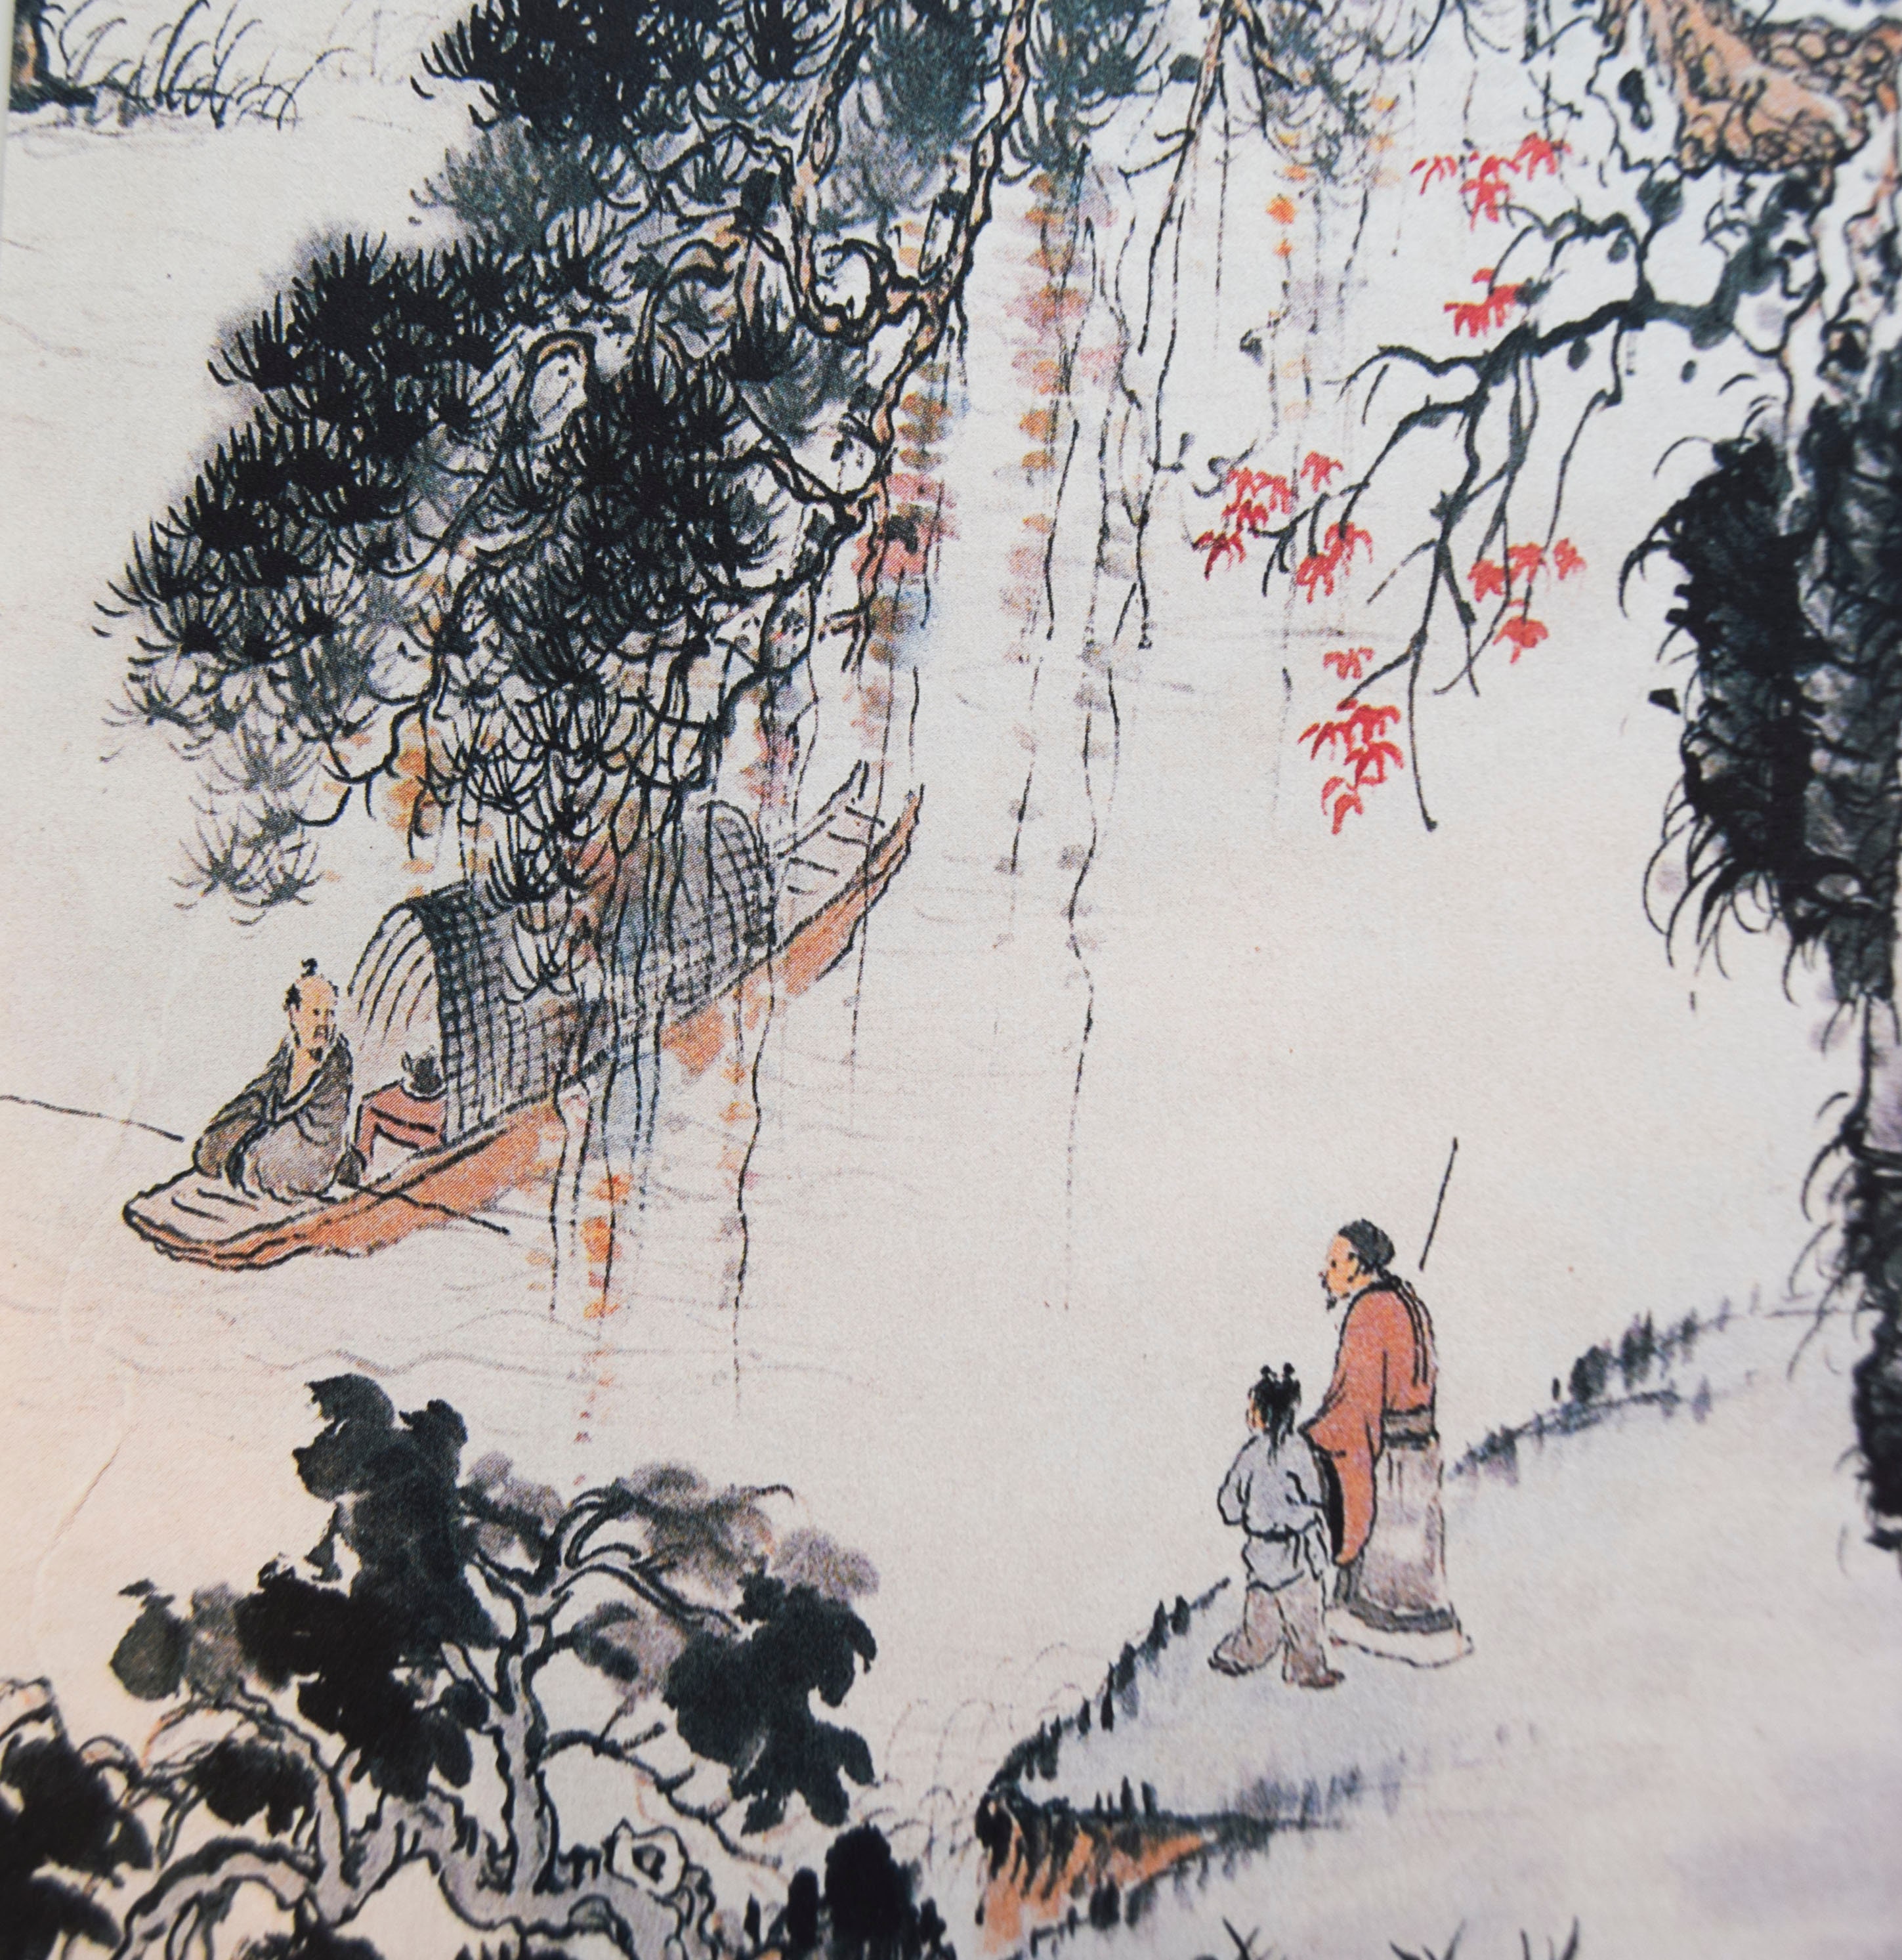 Japanese painting - Wikipedia